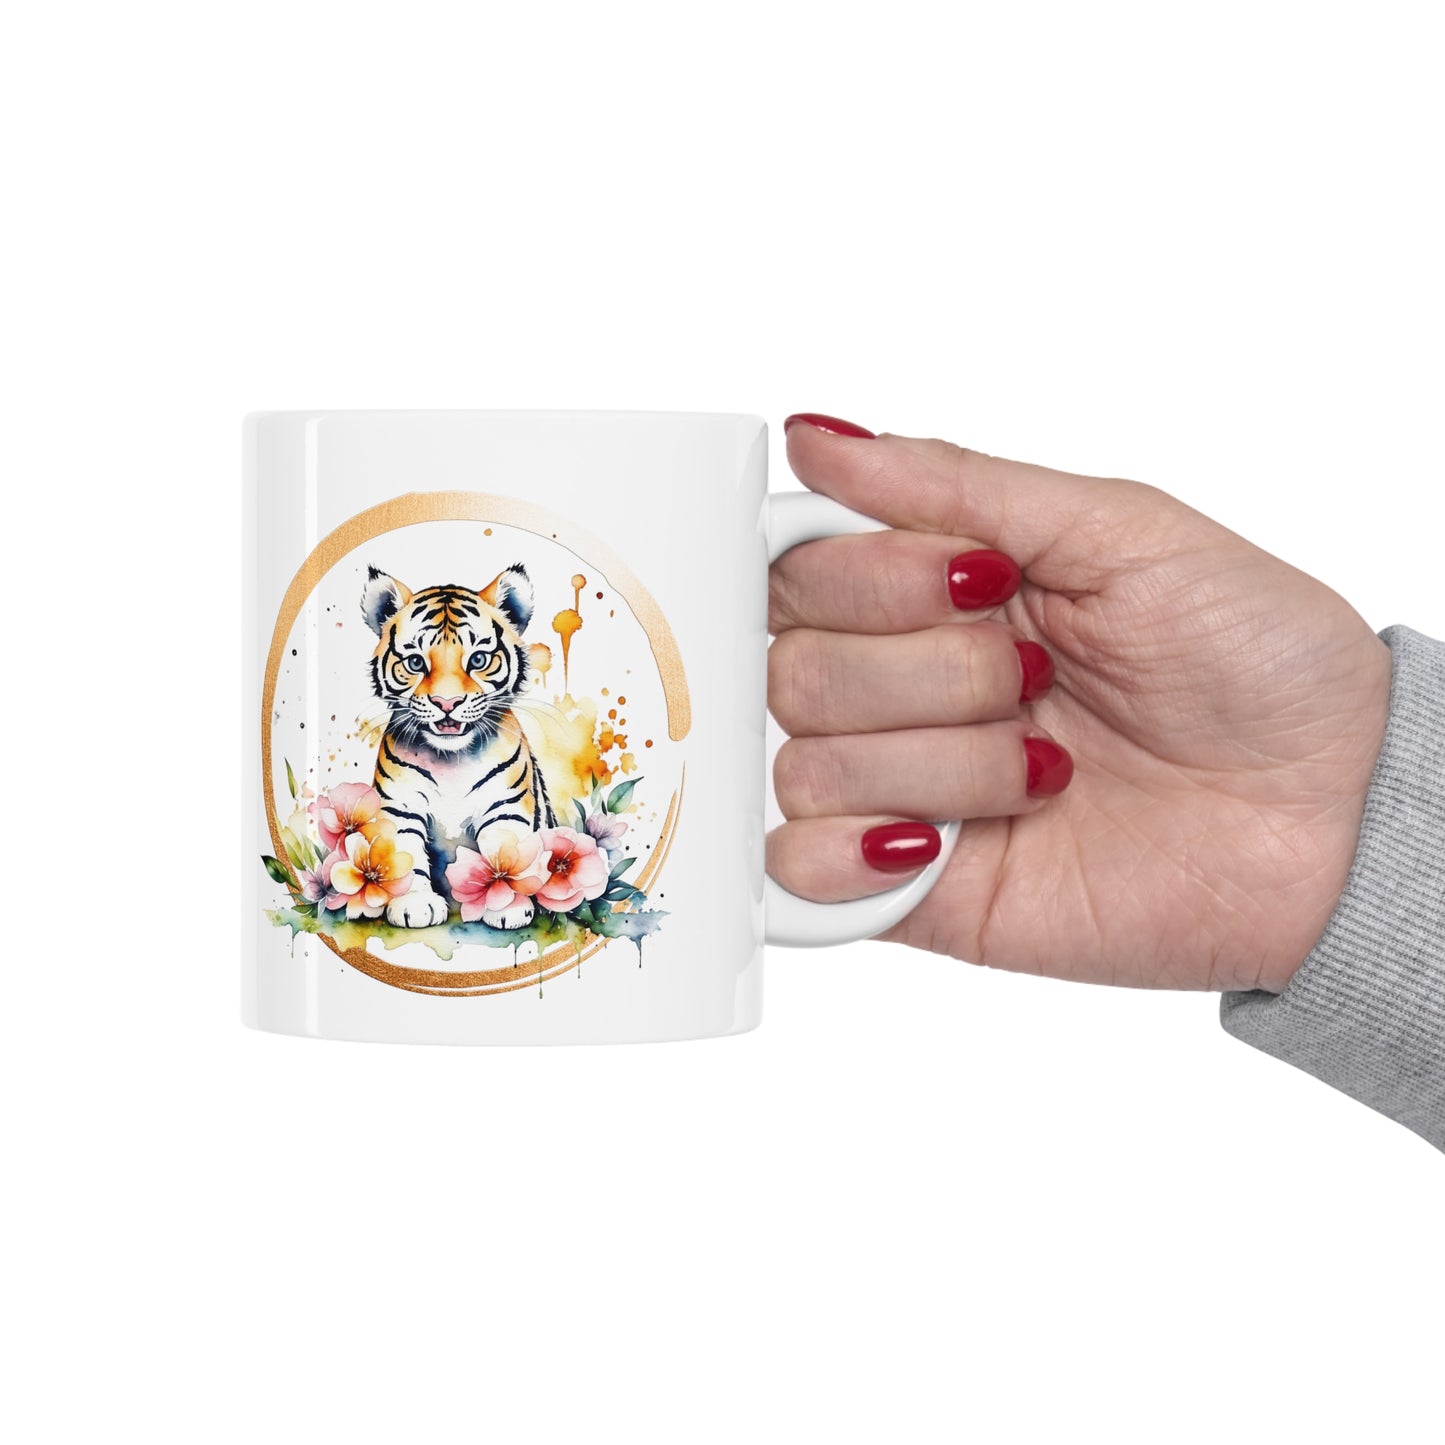 Golden Tiger Ceramic Mug 11oz